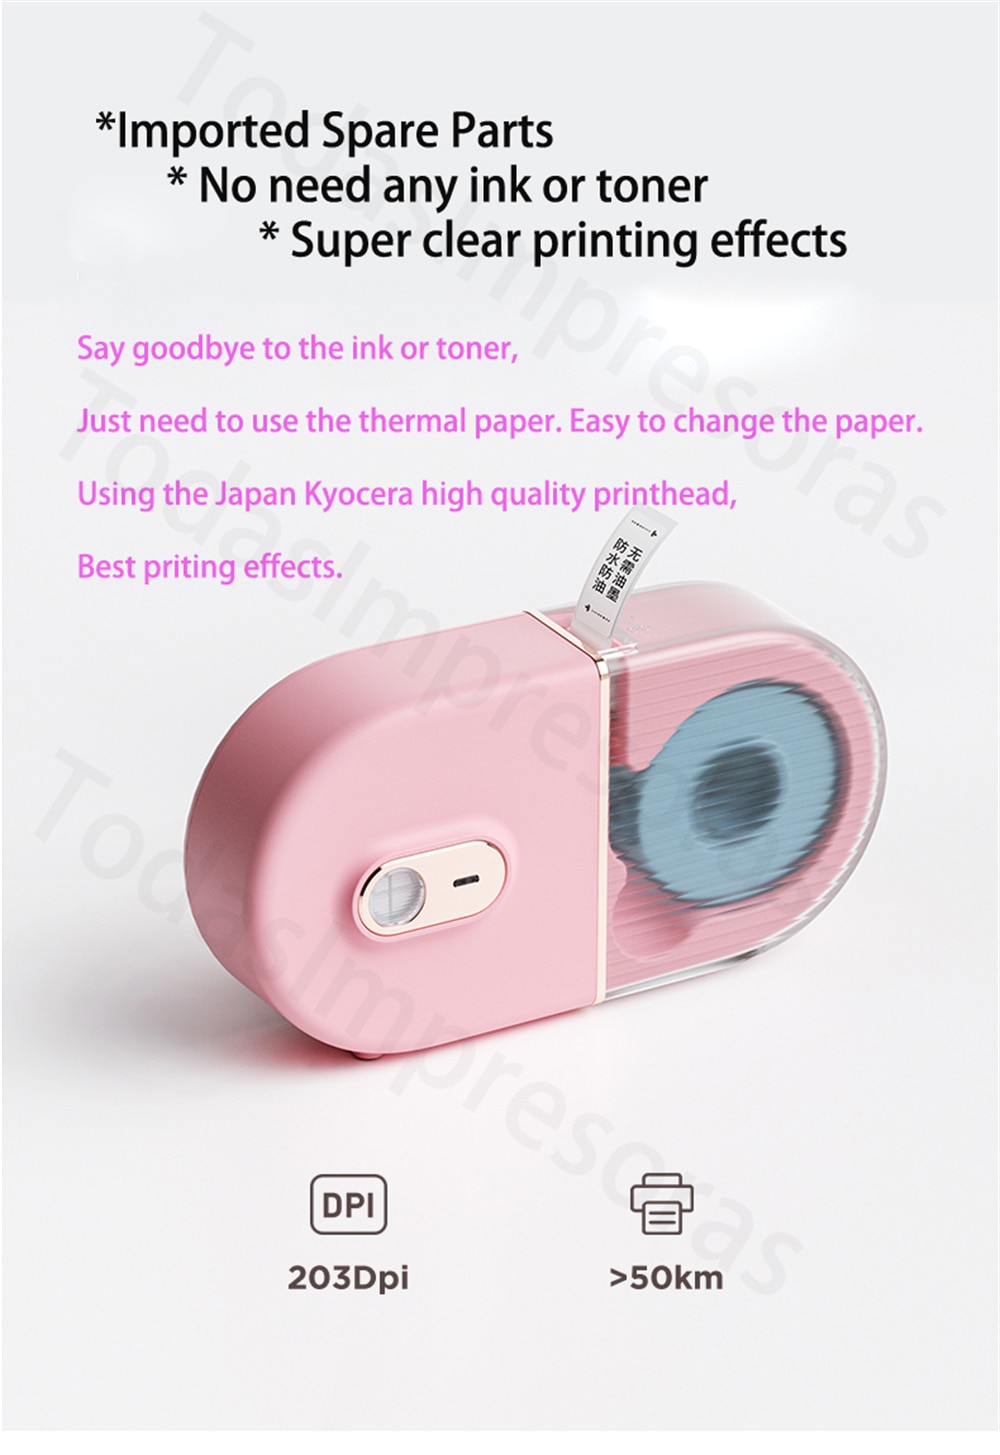 3 Rolls Cute Designs Niimbot B16 Label Tape Paper Waterproof Price Label Printers Paper Printer Supplies Sticker Paper Etiquetas